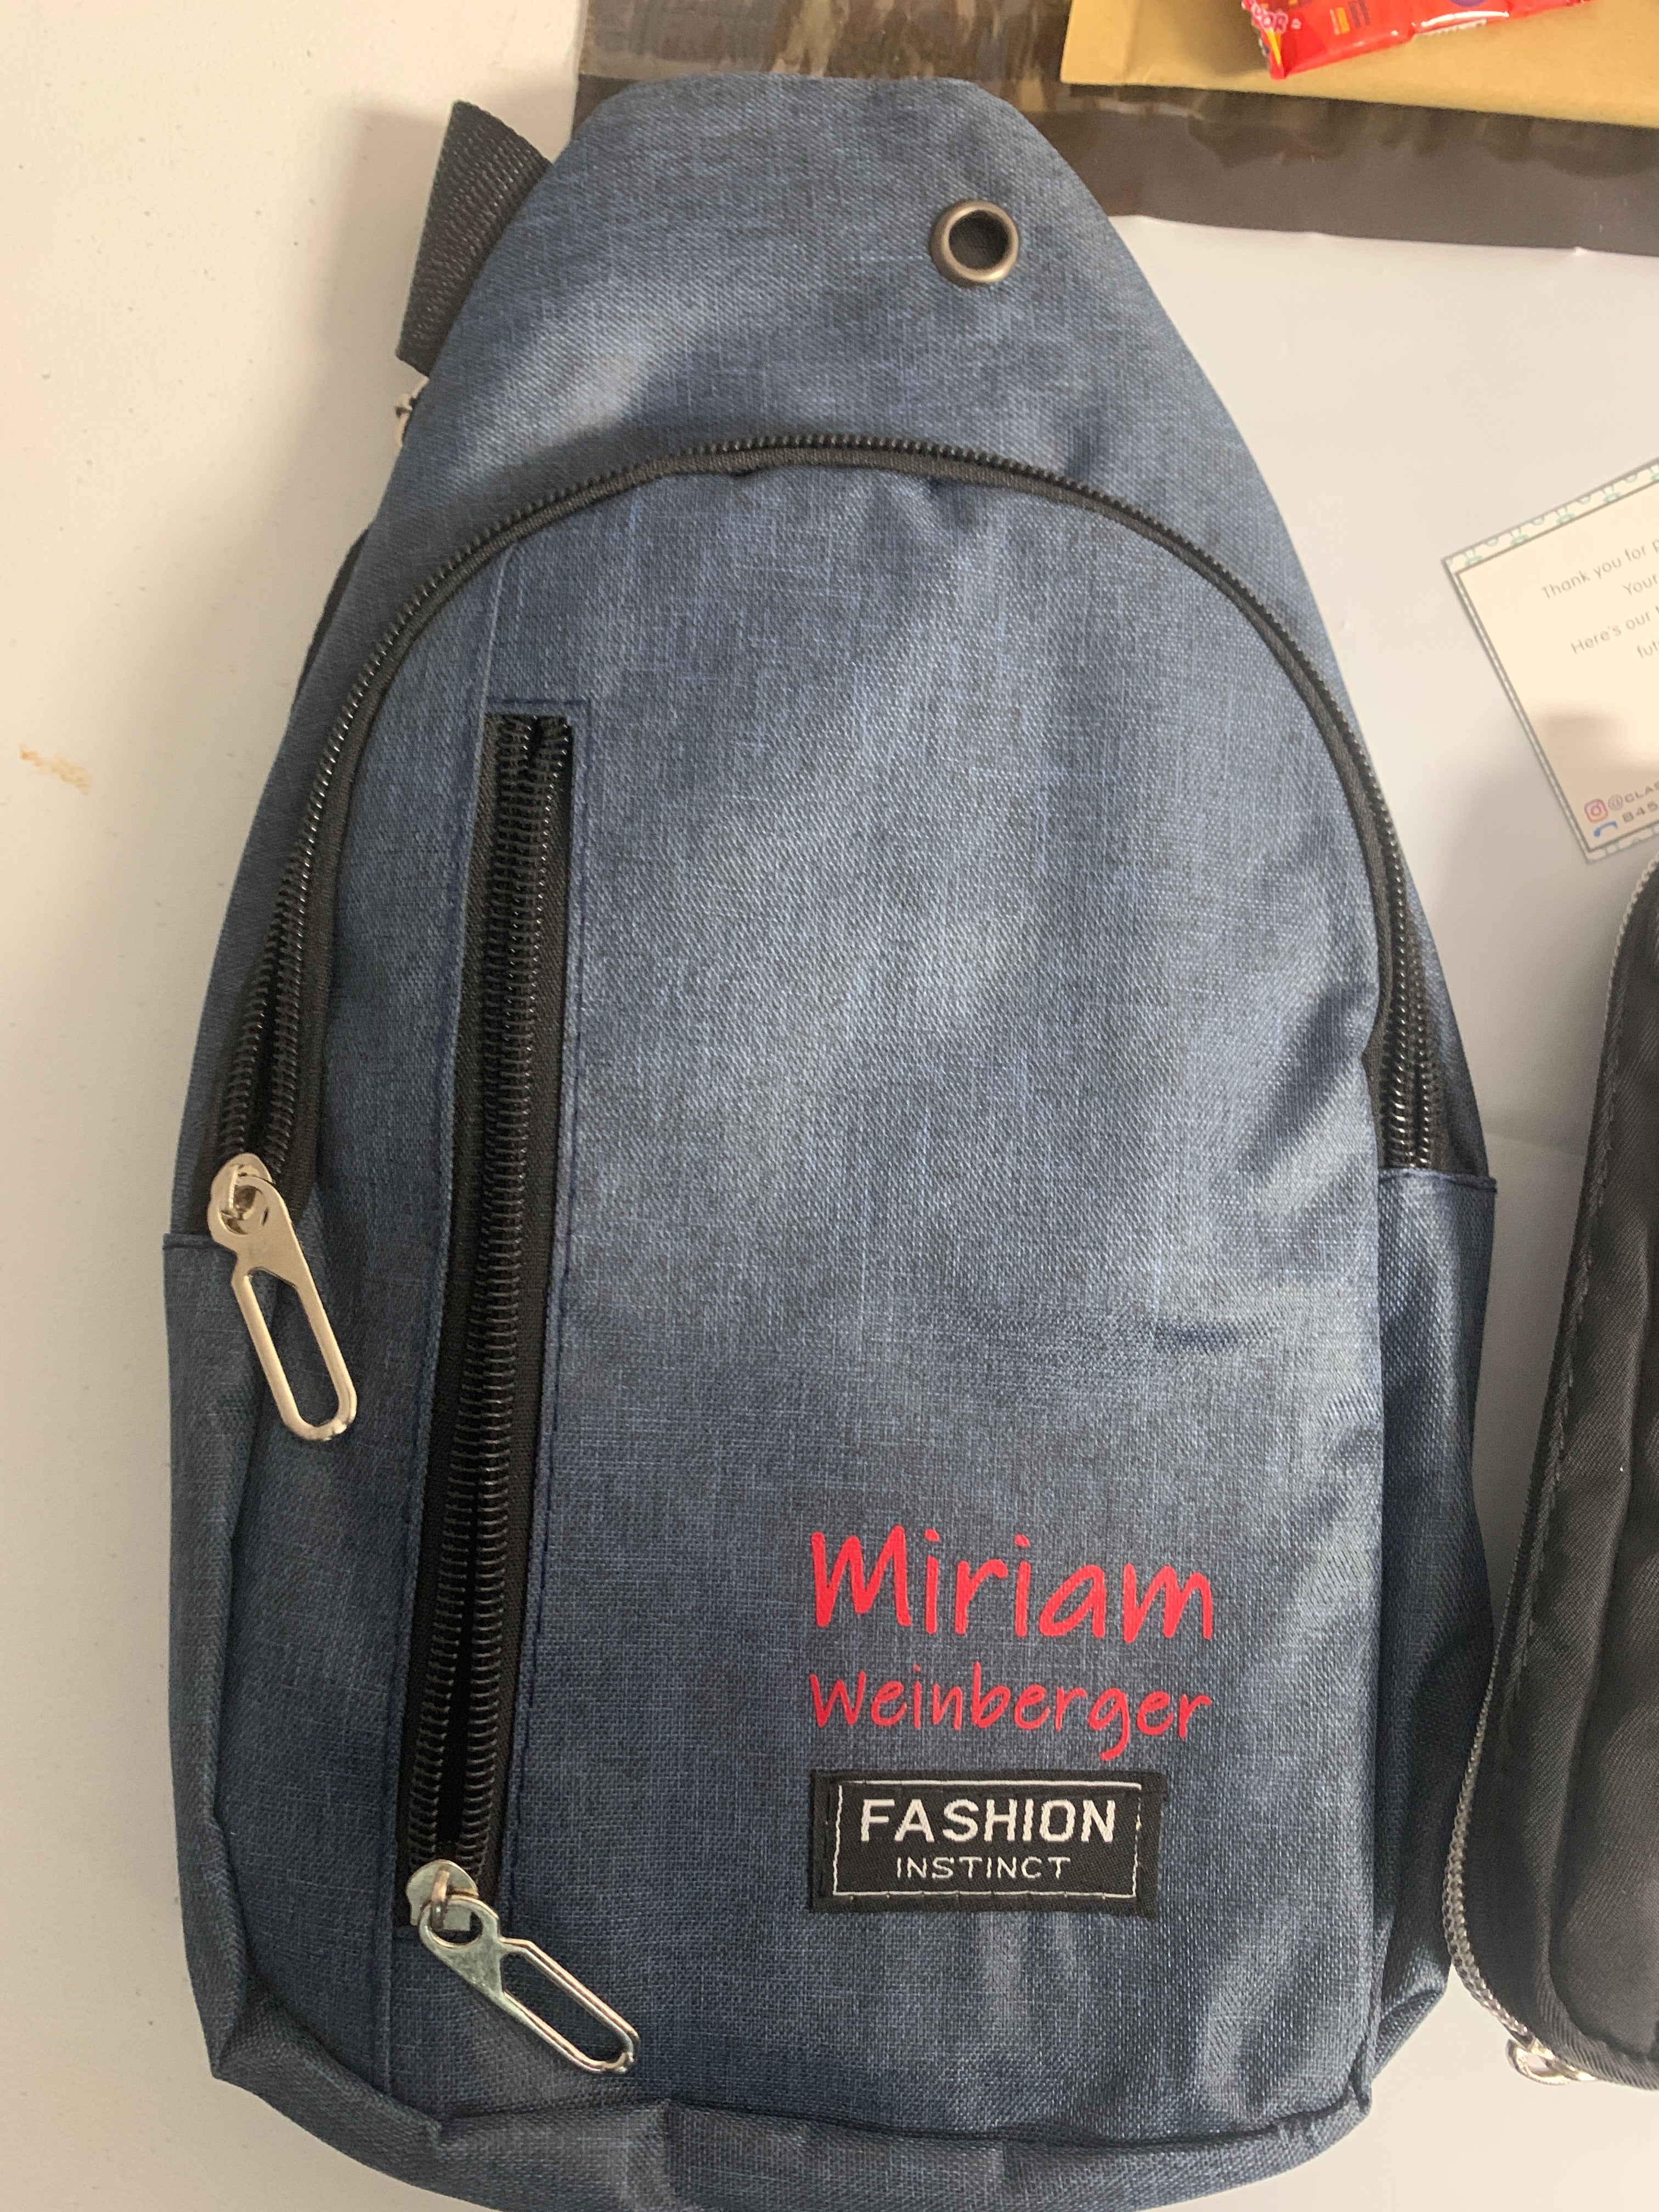 Black grey or denim personalized bag / trip, side/ sling/ crossbody bag school. camp